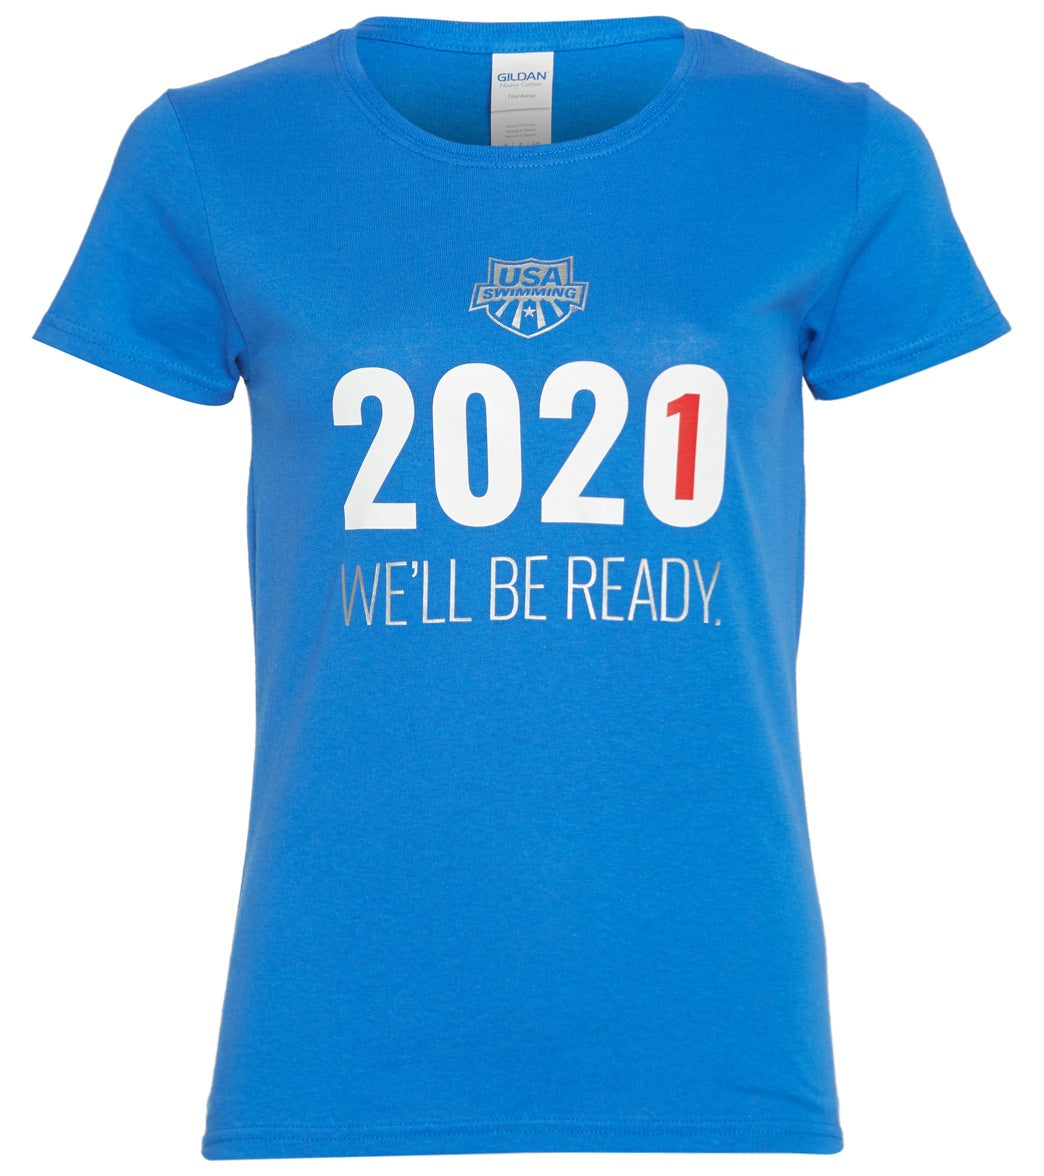 USA Swimming Womens 2021 We Will Be Ready Crew Neck T-Shirt